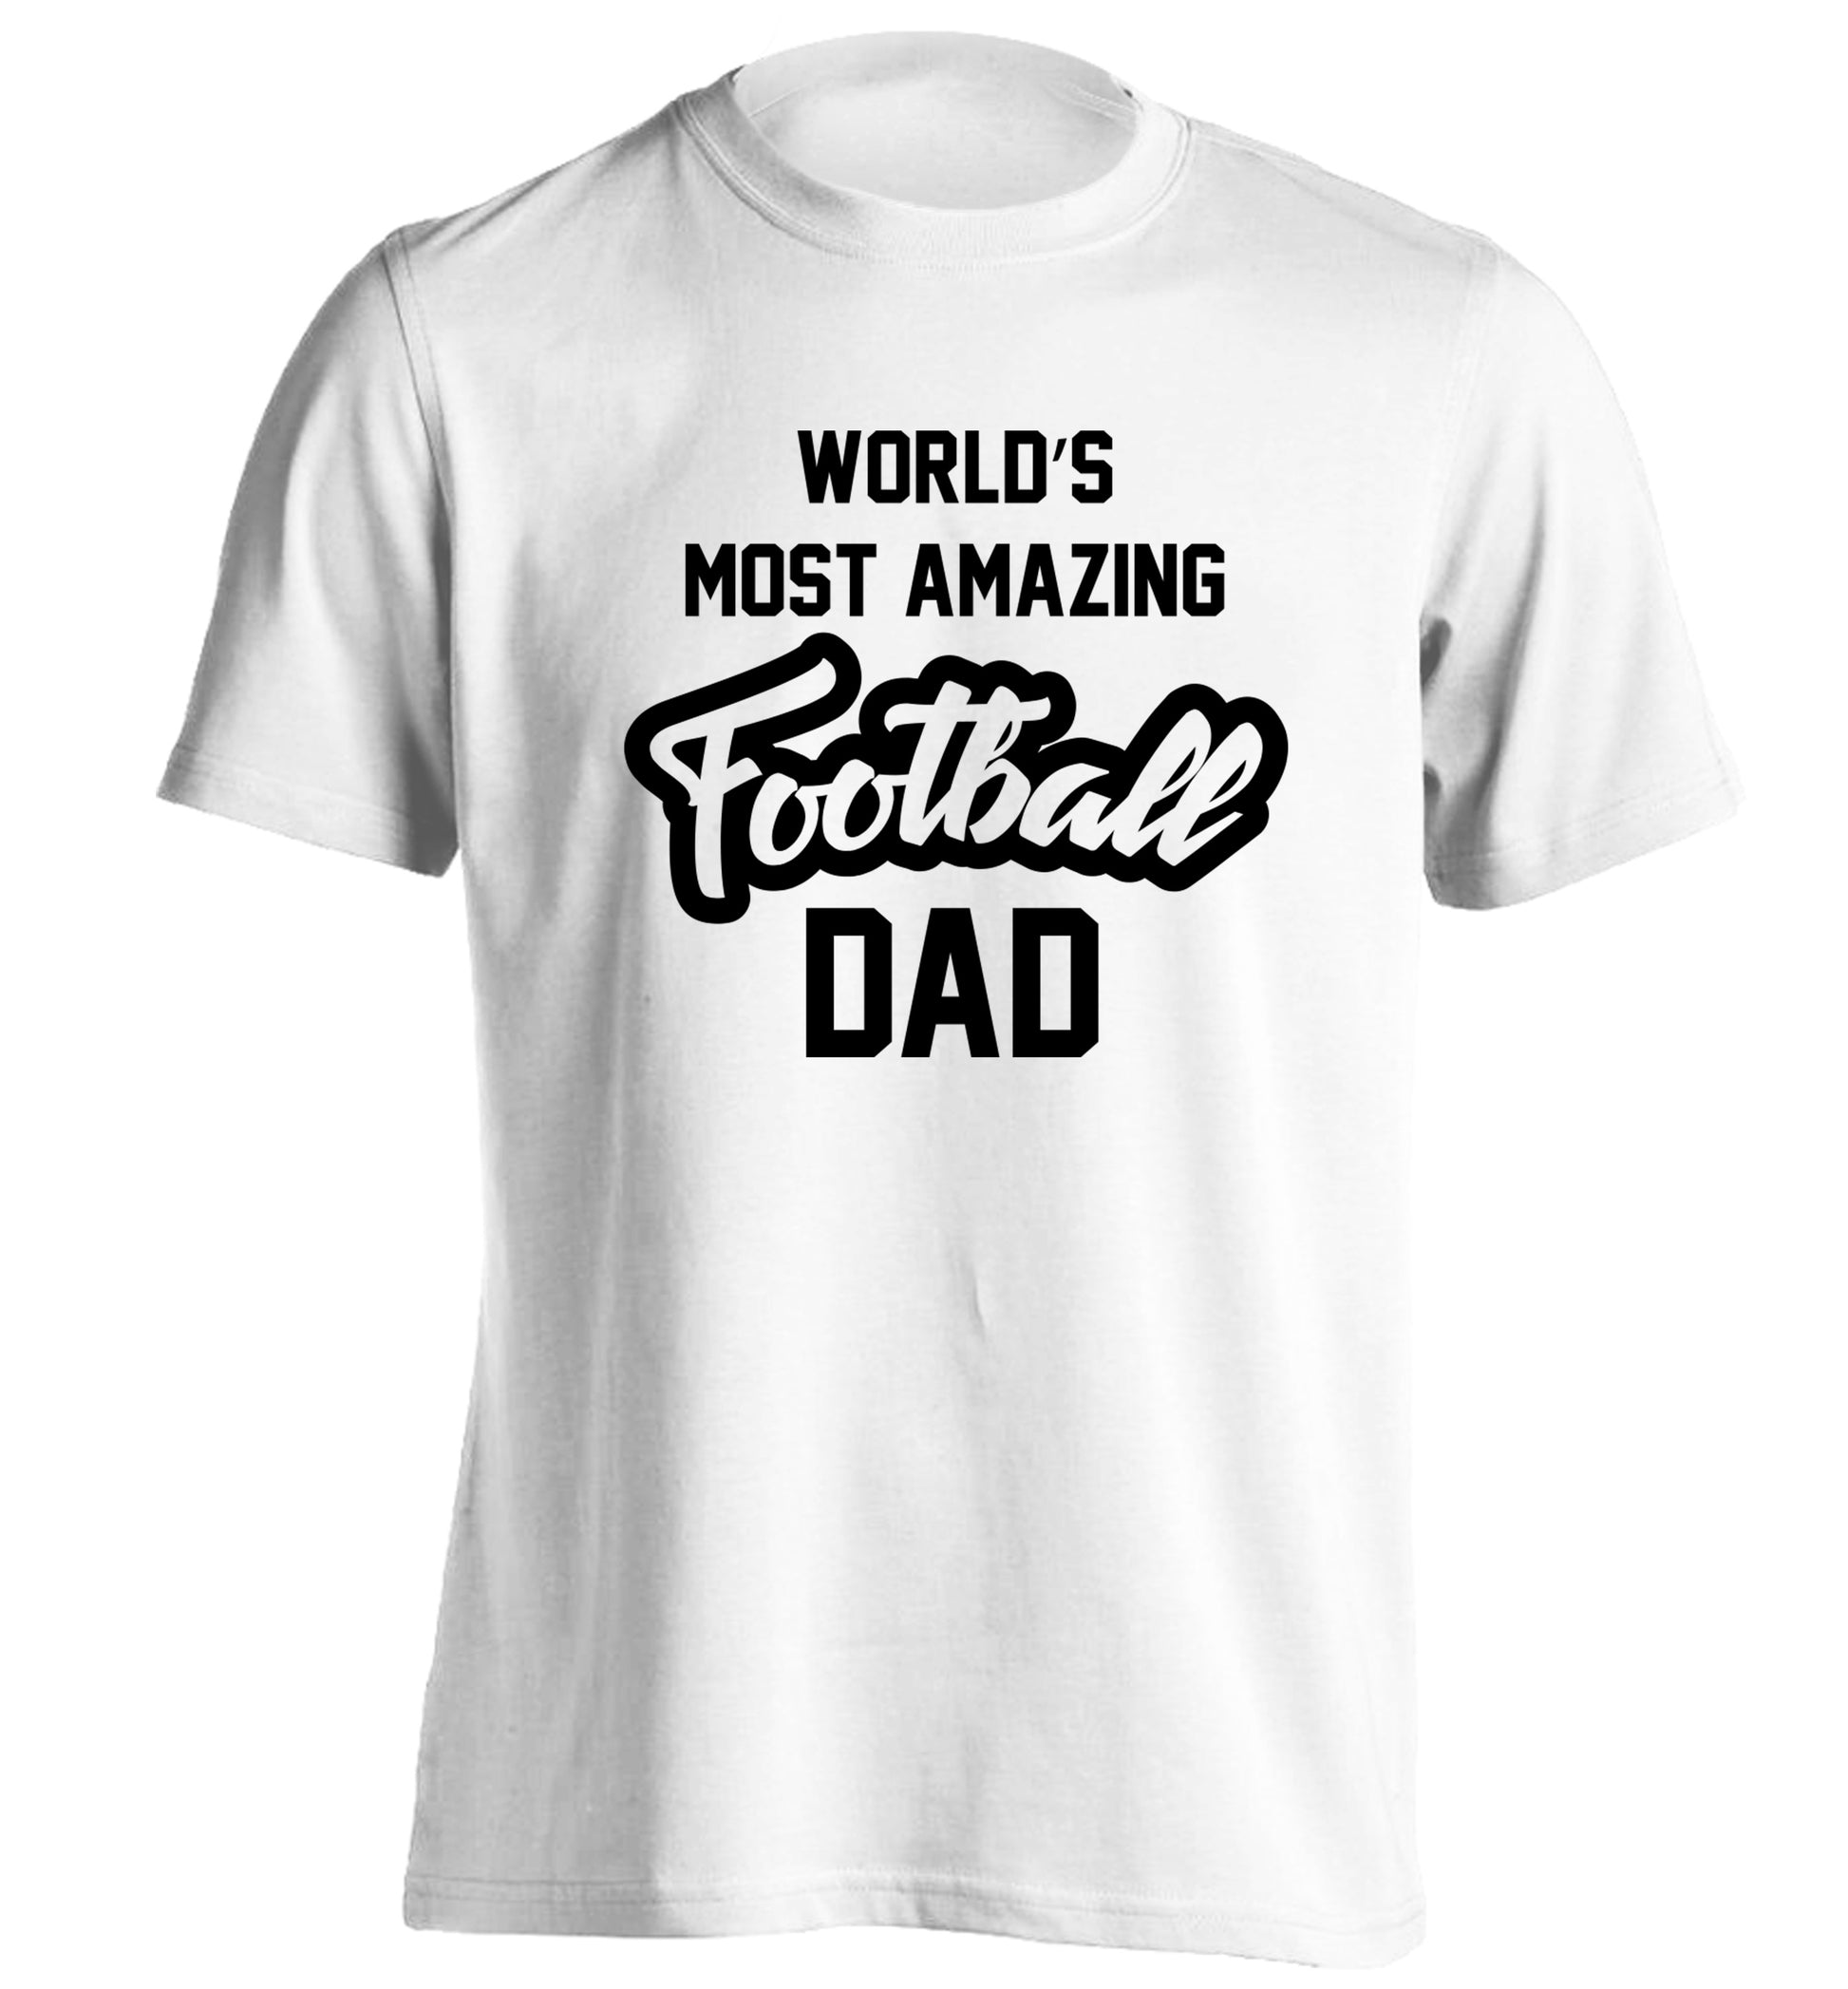 Worlds most amazing football dad adults unisexwhite Tshirt 2XL